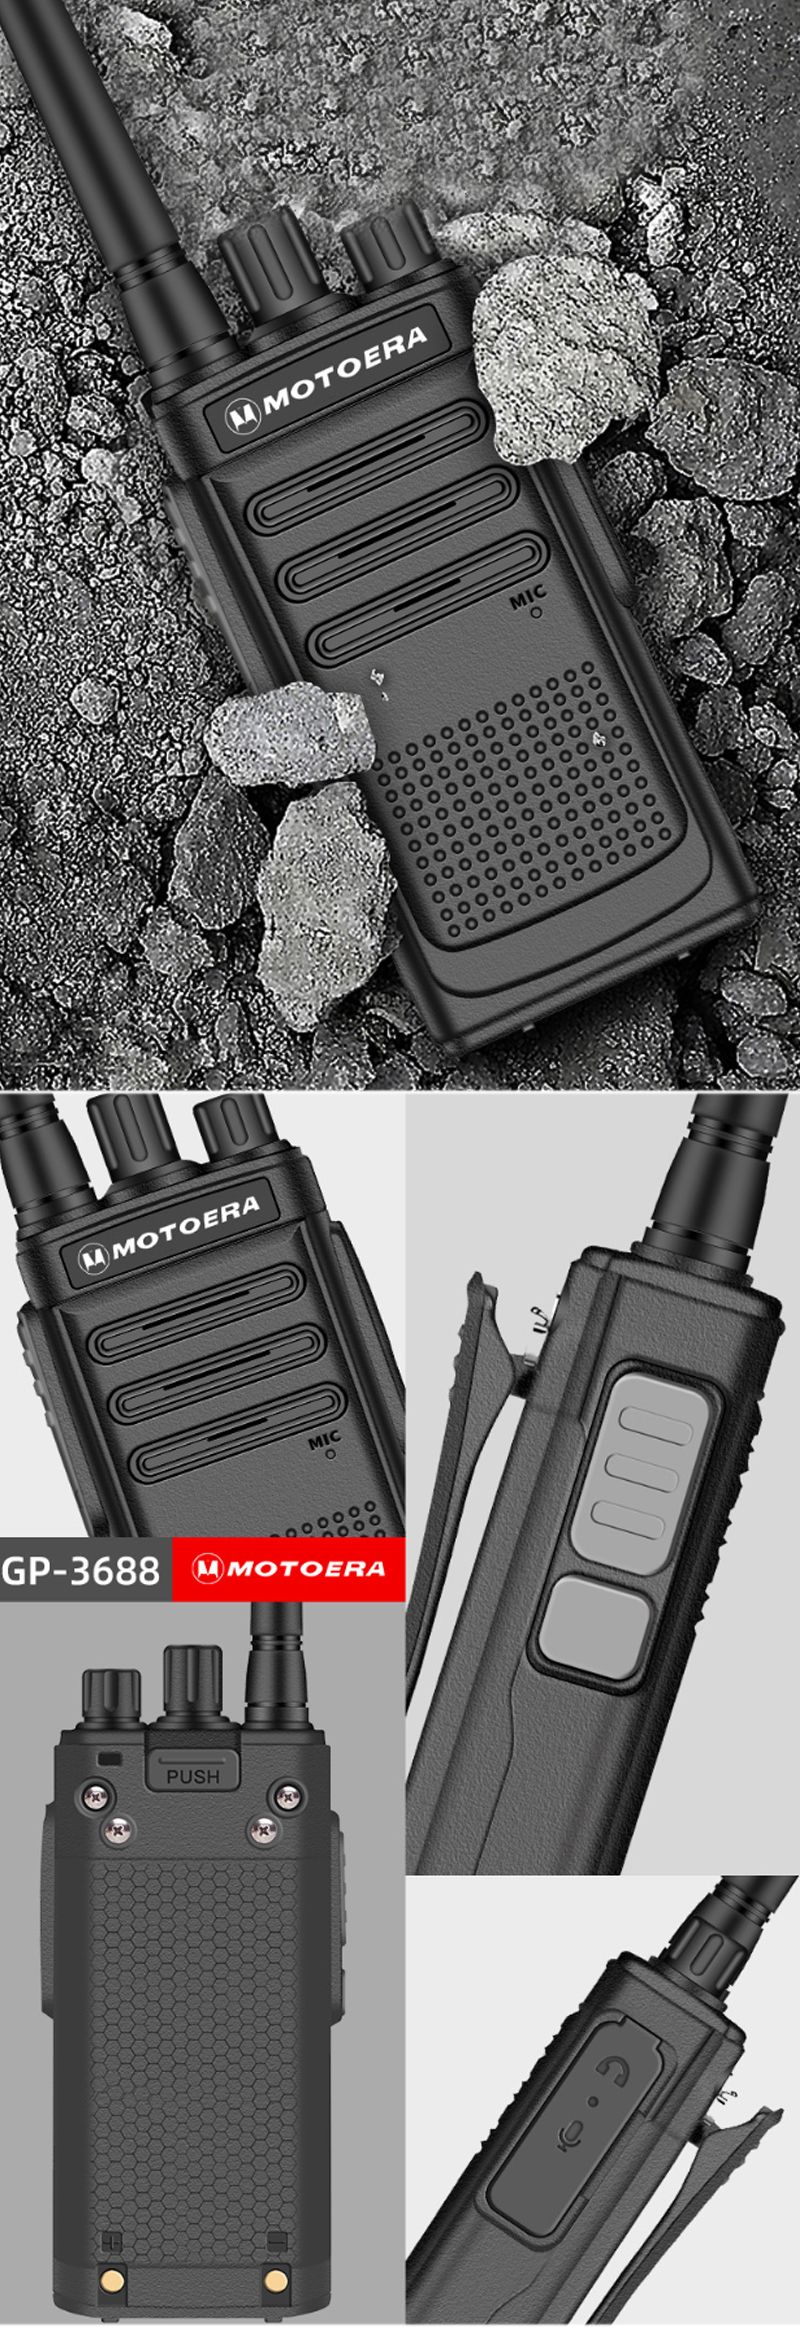 MOTOERA-GP-3688-18W-Radio-Handheld-Walkie-Talkie-16-Channels-Hotel-Civilian-Interphone-1657880